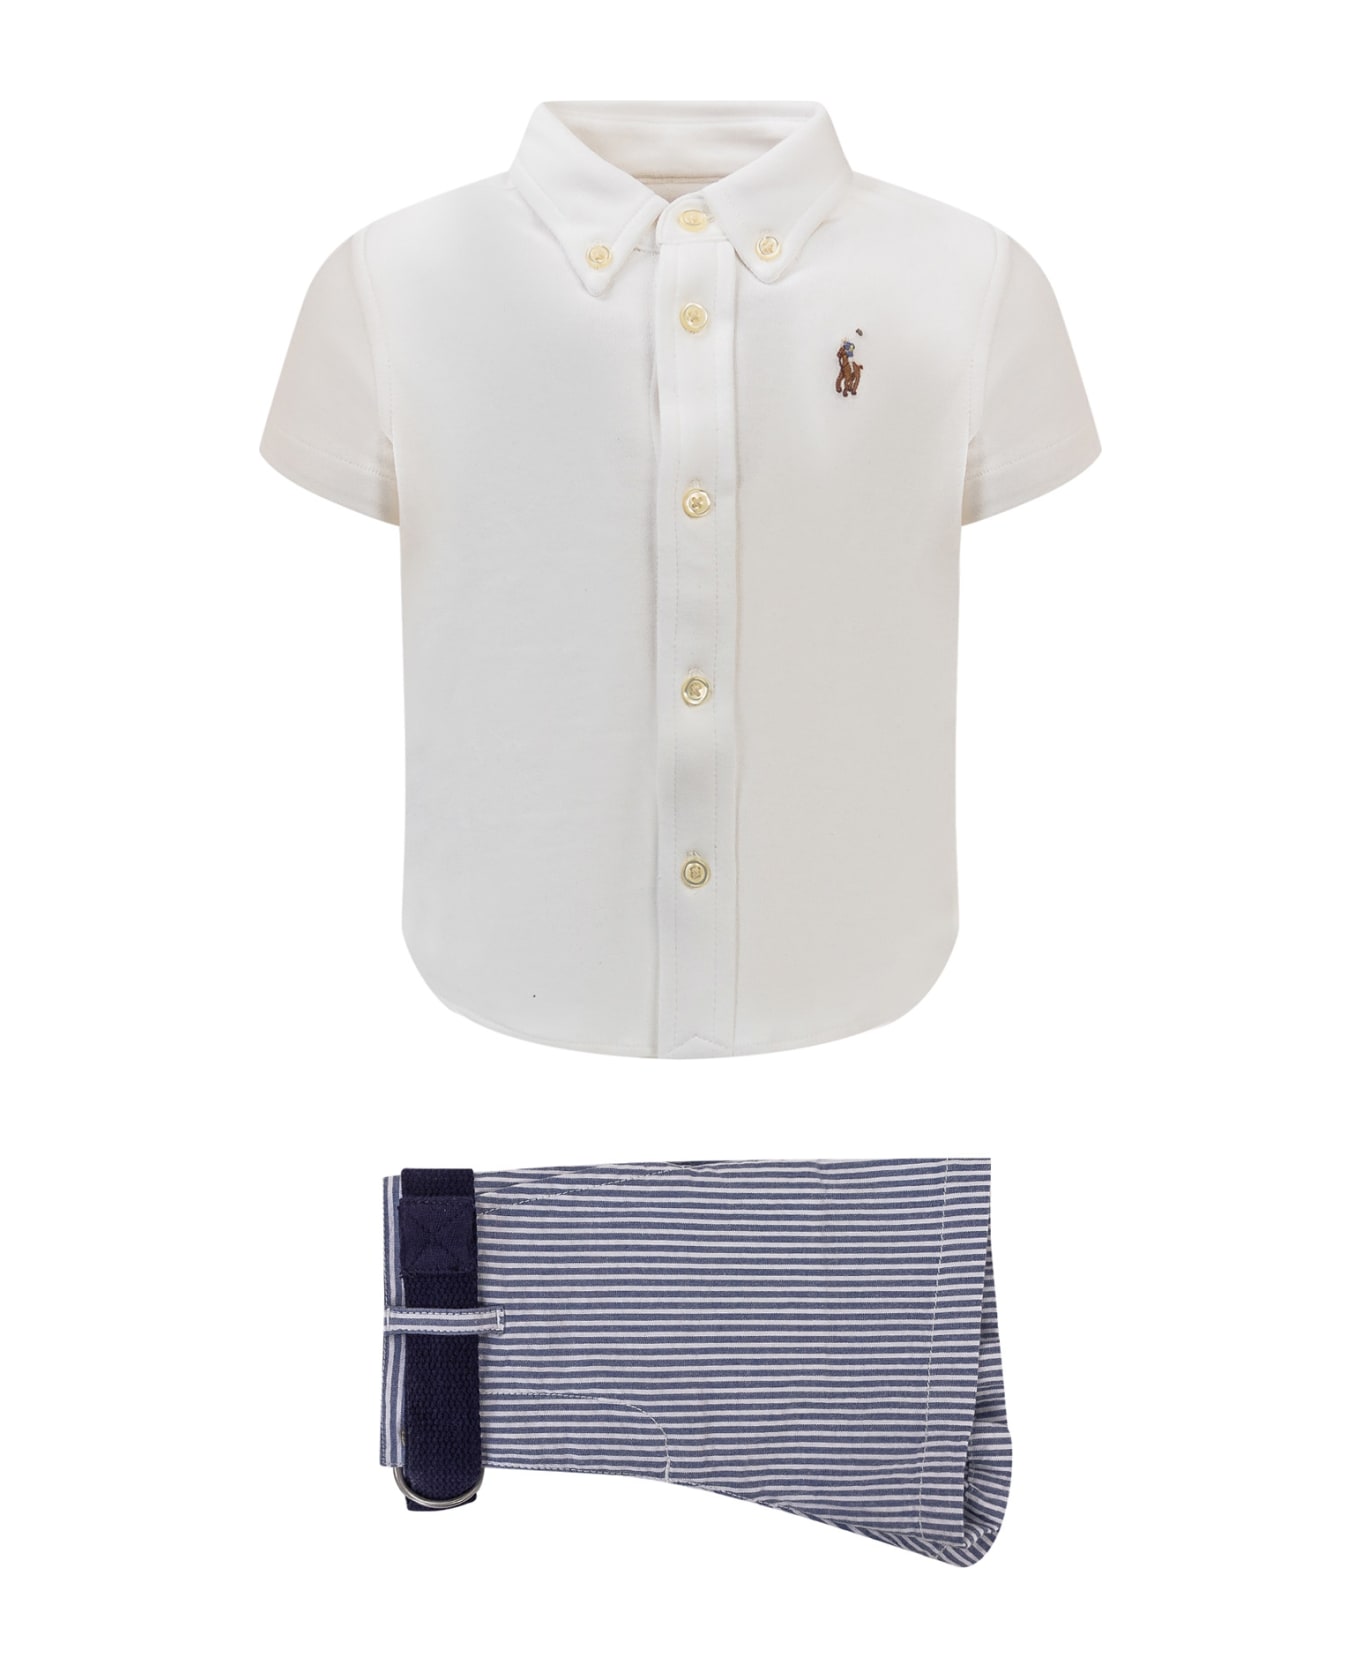 Polo Ralph Lauren Shirt And Shorts Set - WHITE